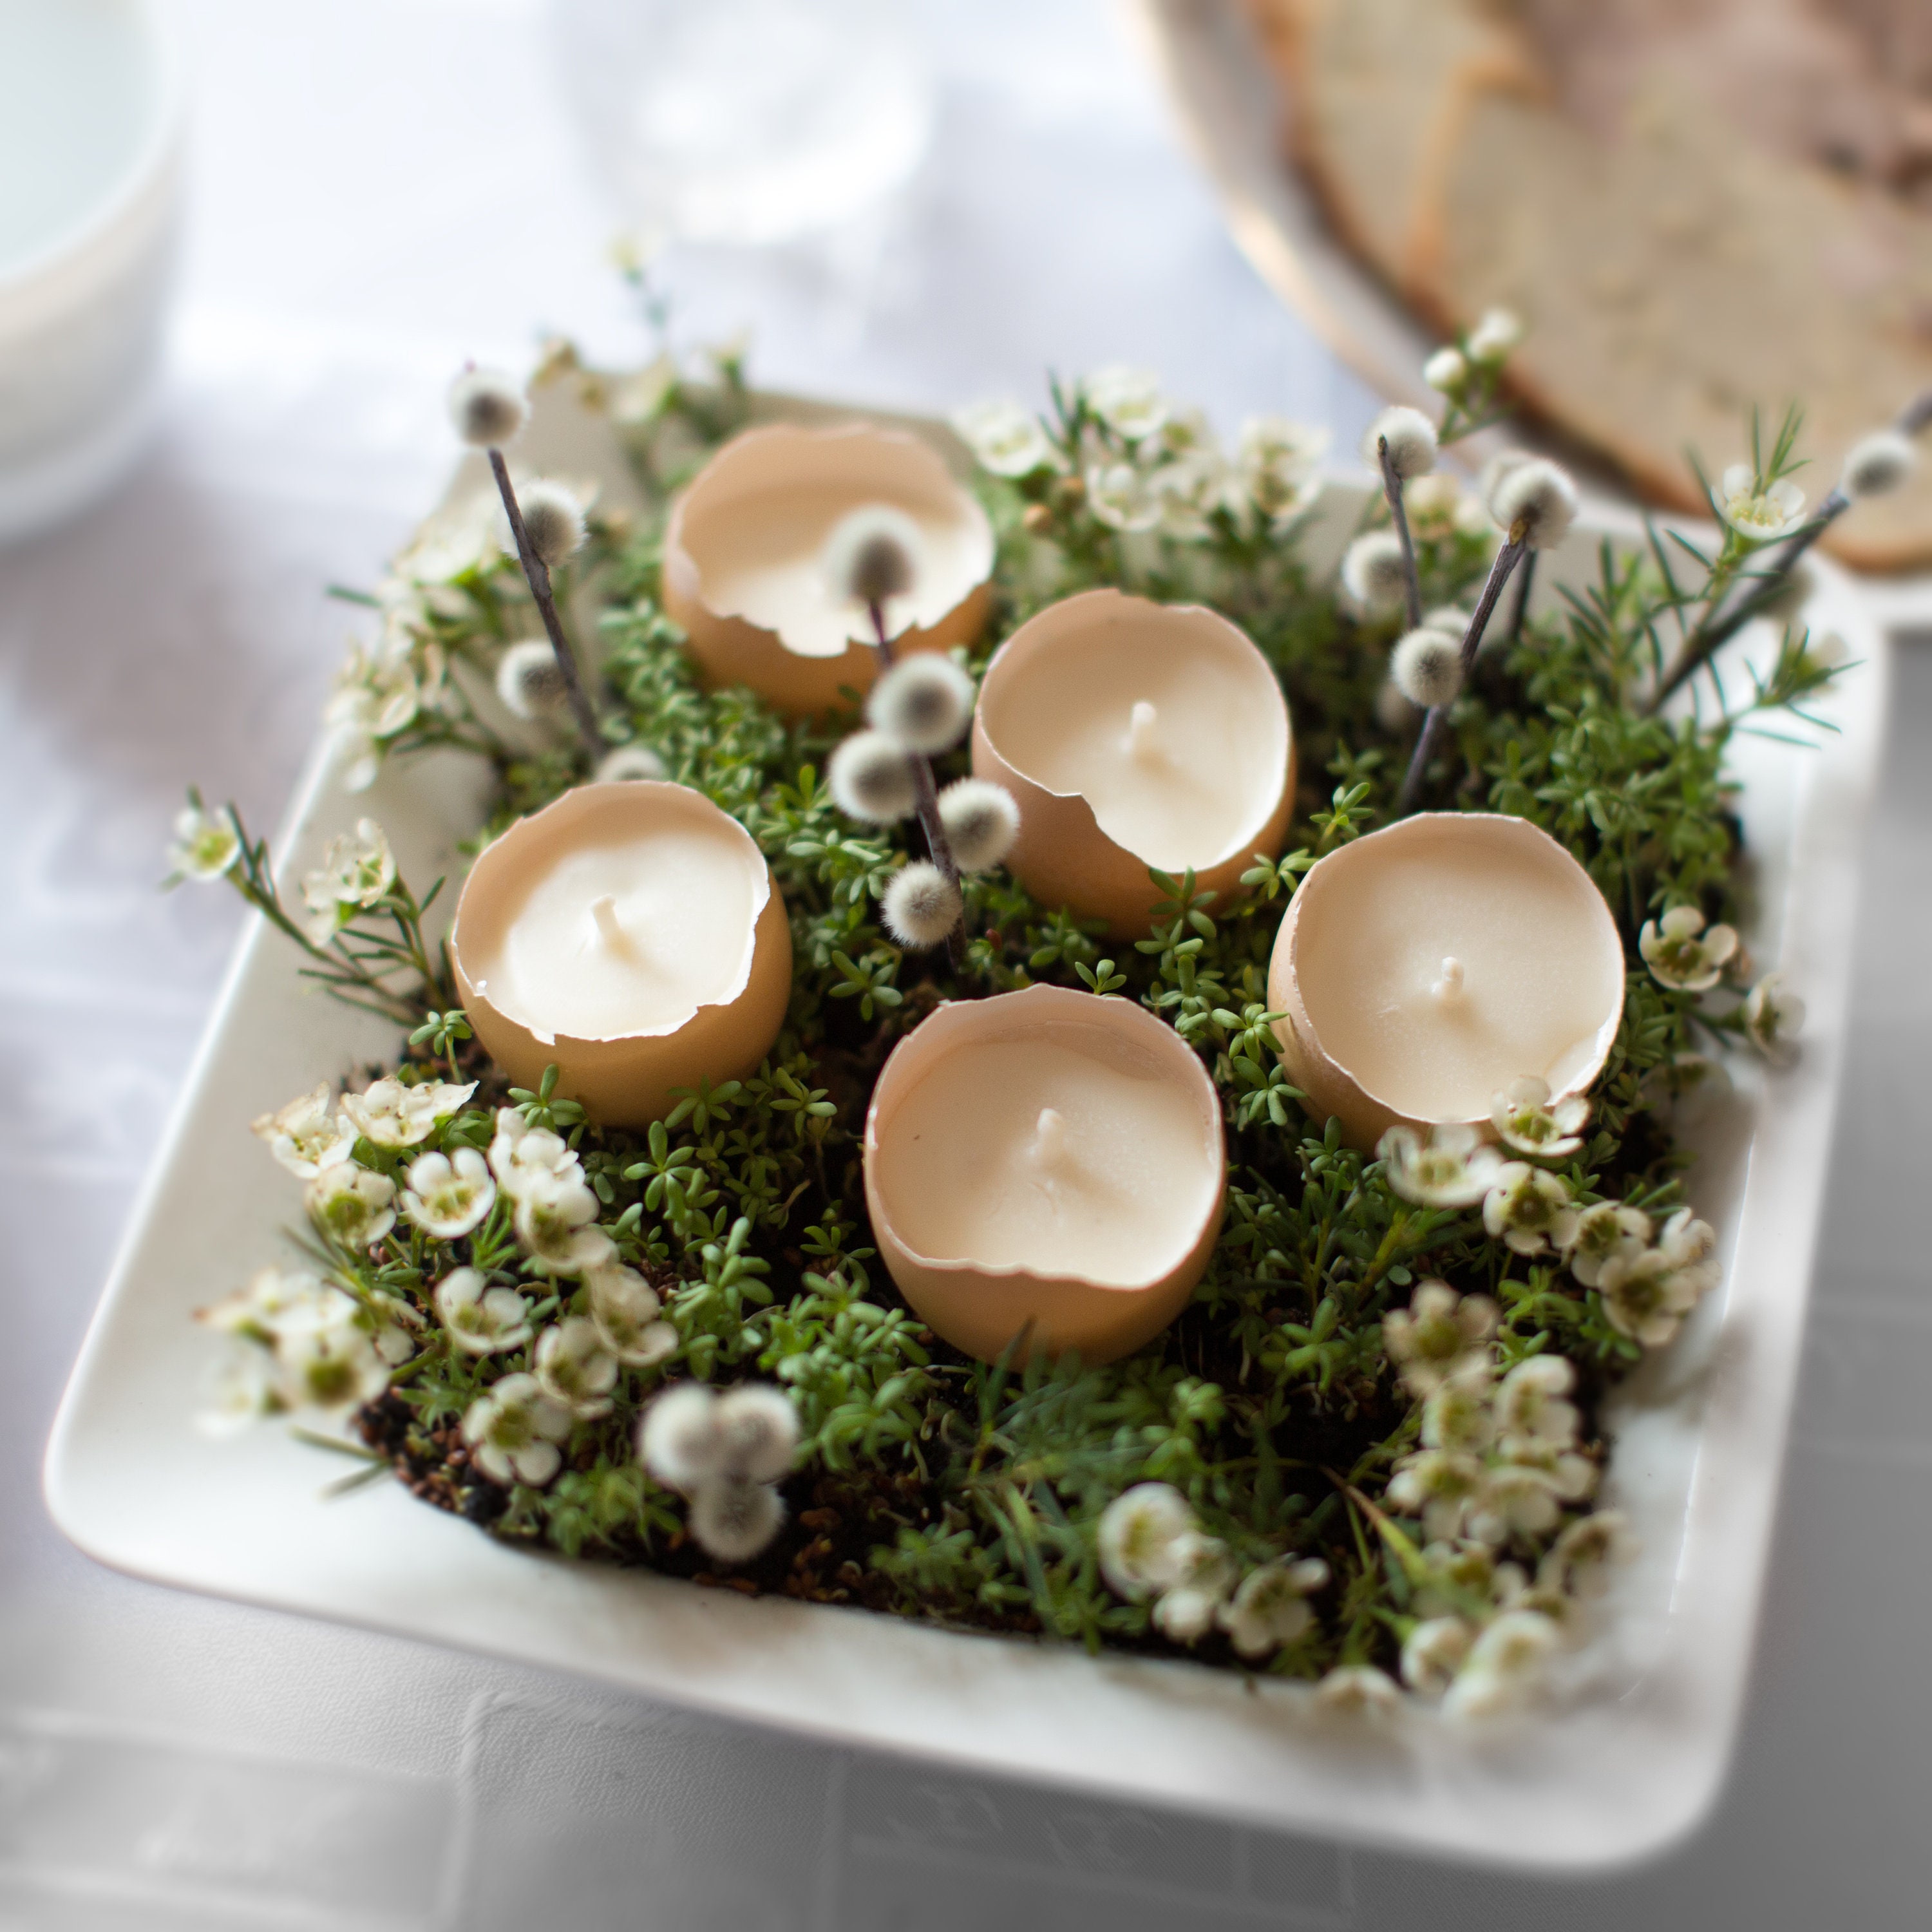 Festive Gold Foil Egg Easter Decoration Ideas For Your Table